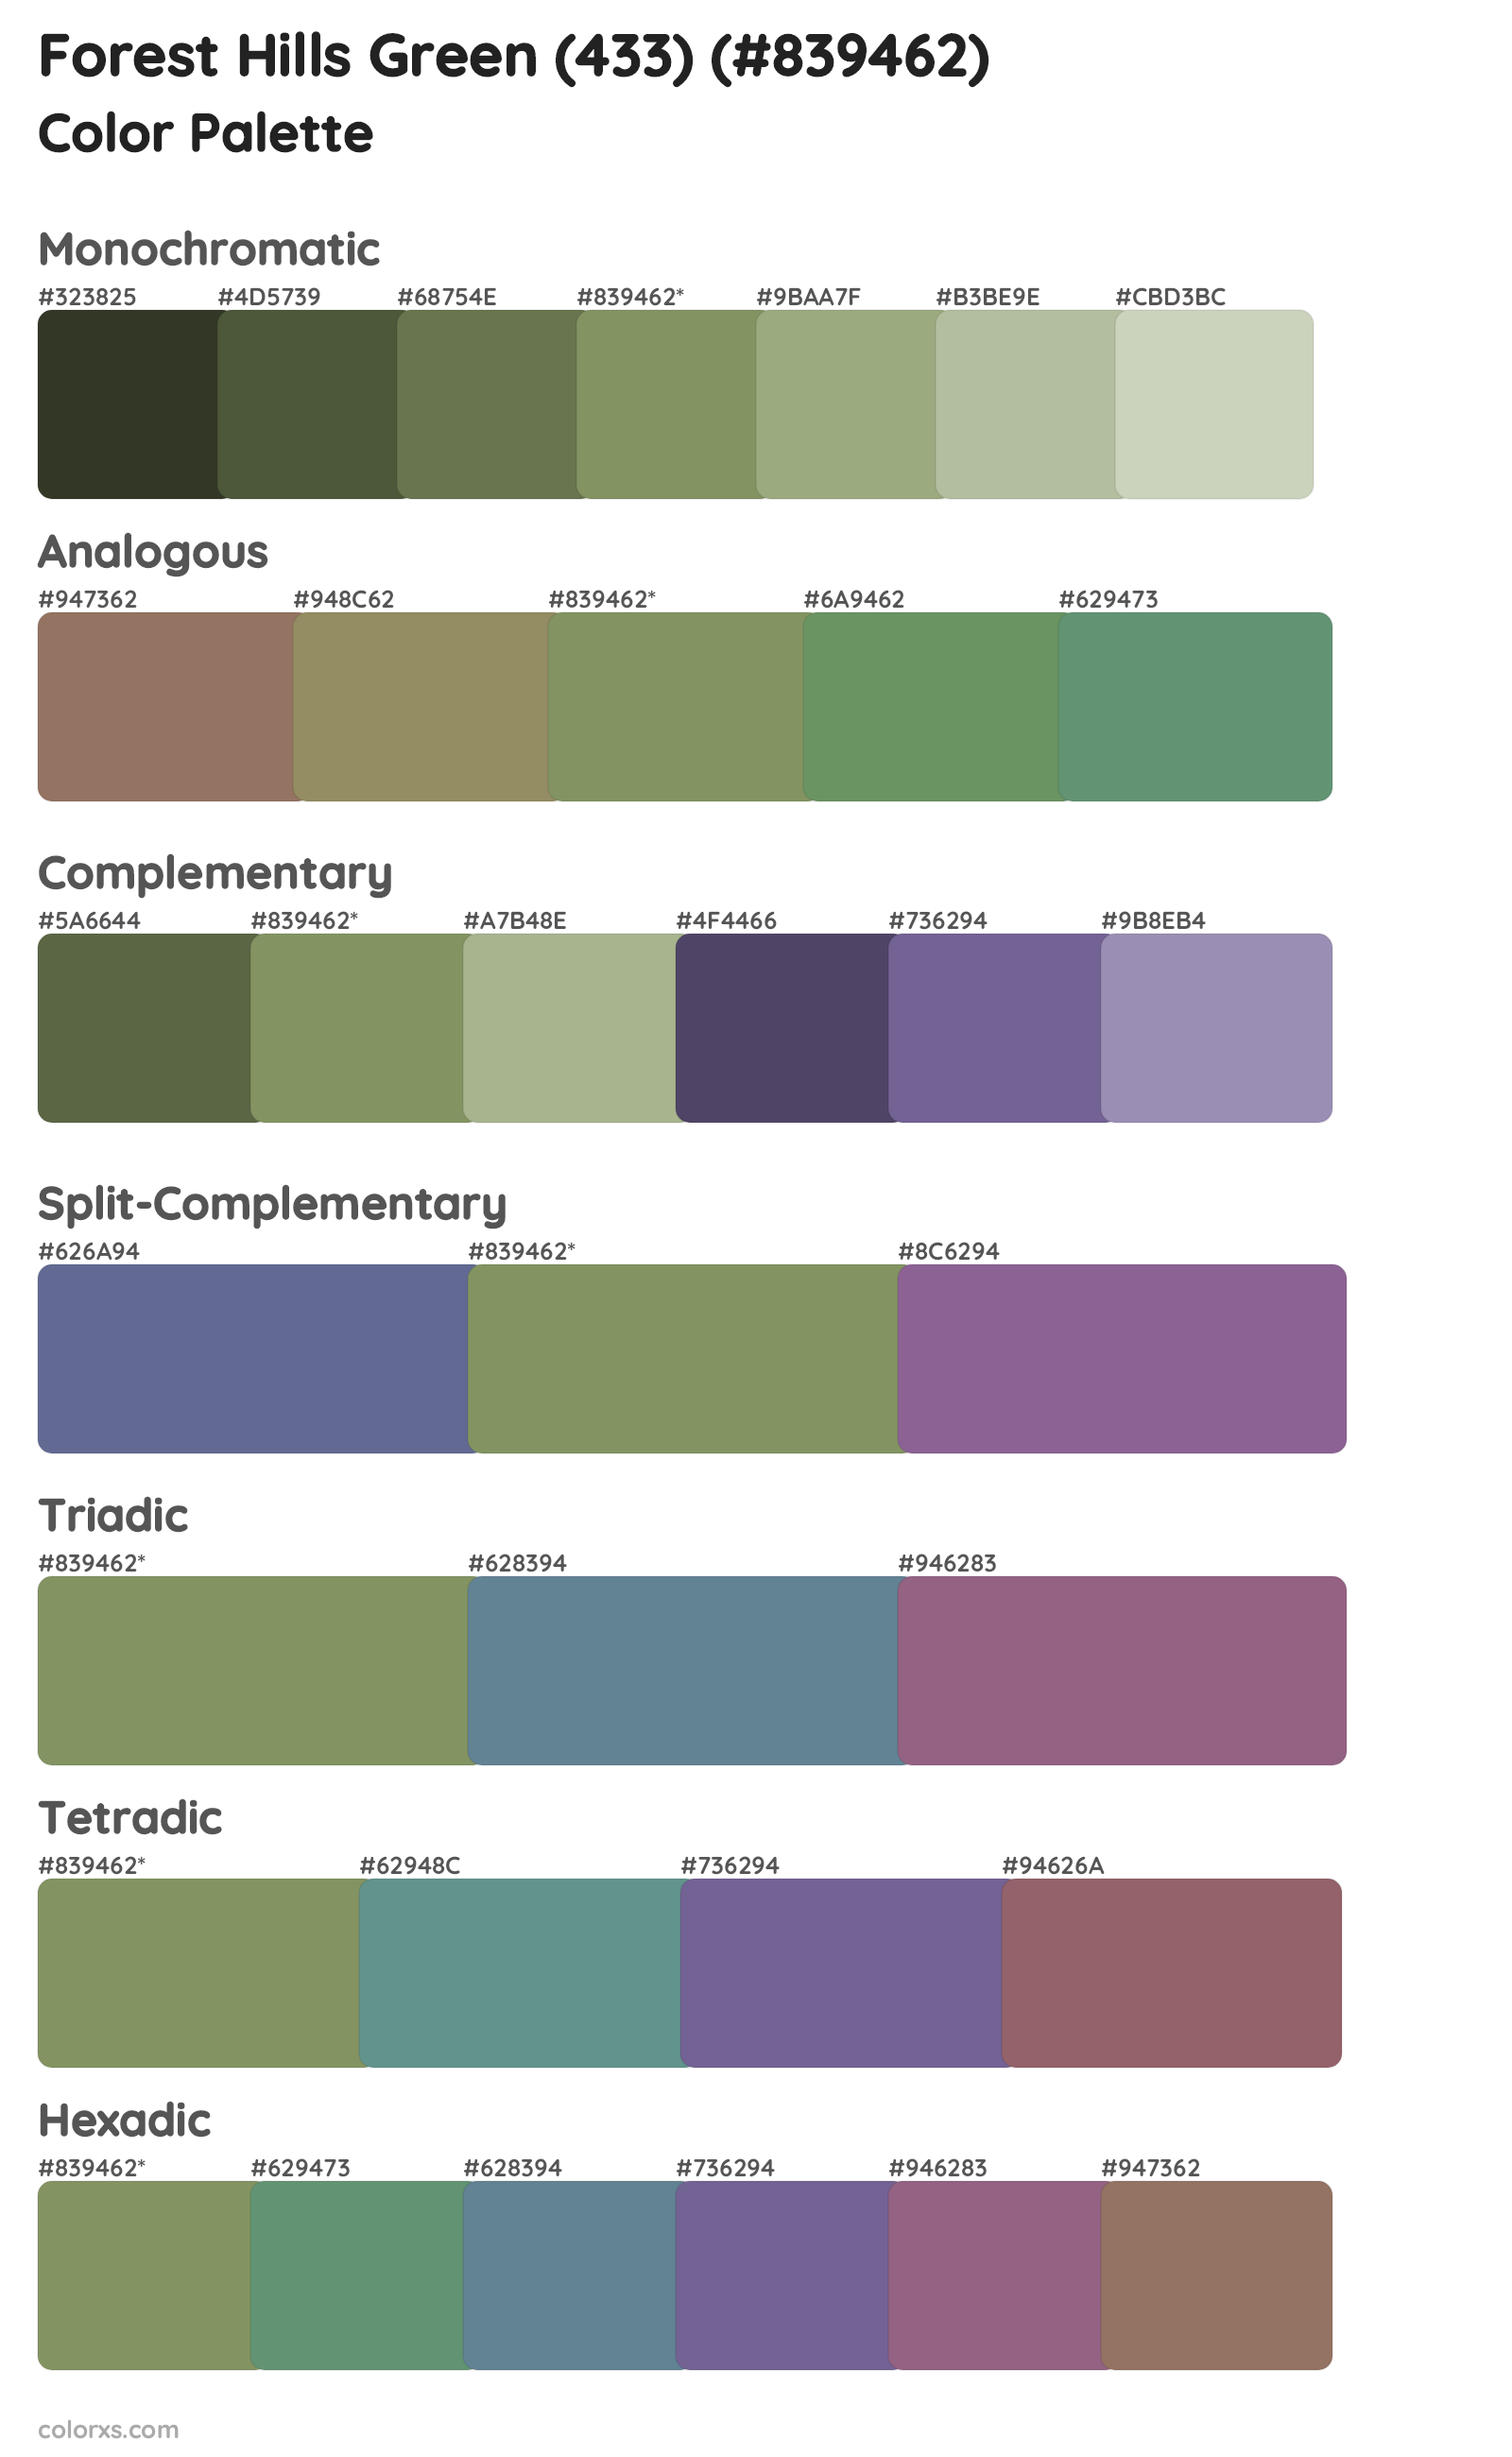 Forest Hills Green (433) Color Scheme Palettes